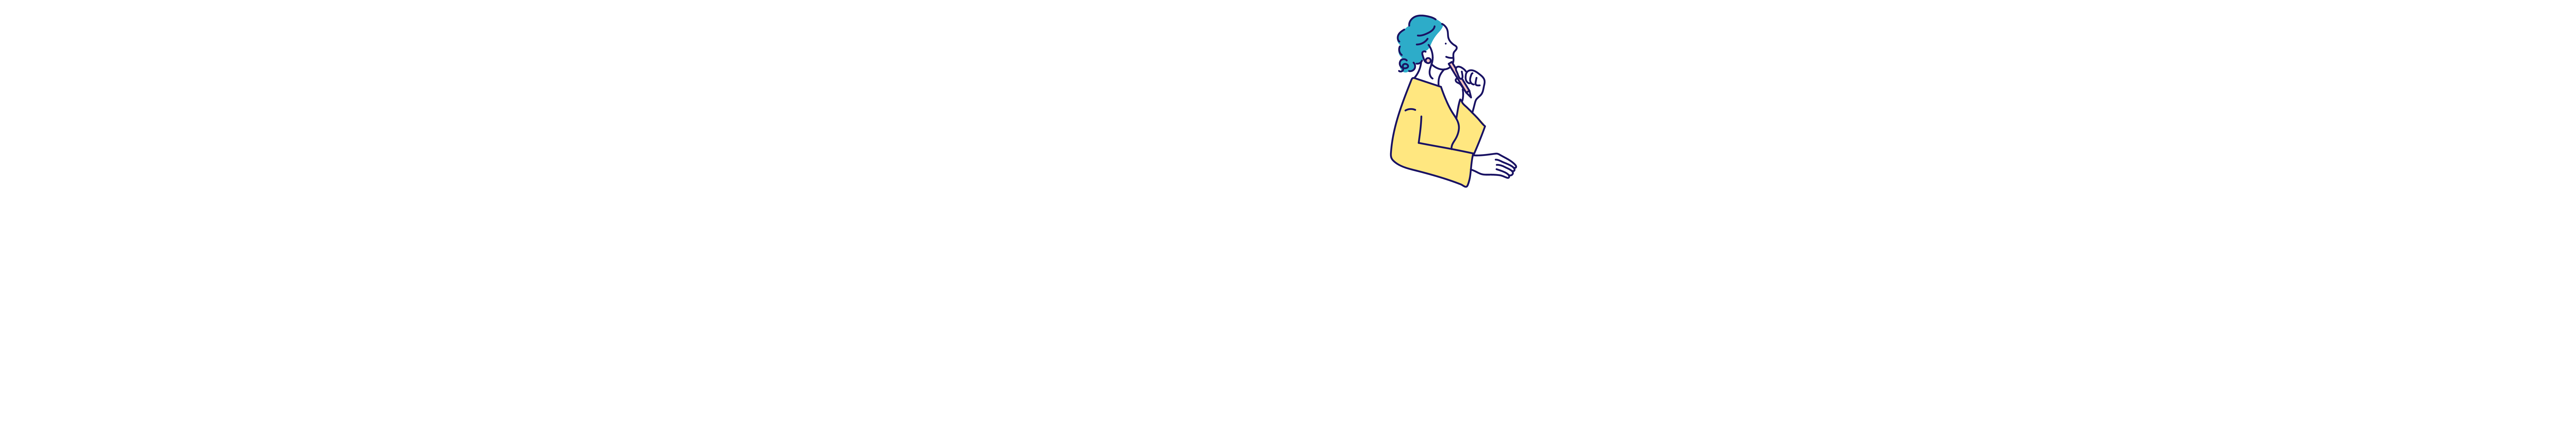 special_contents